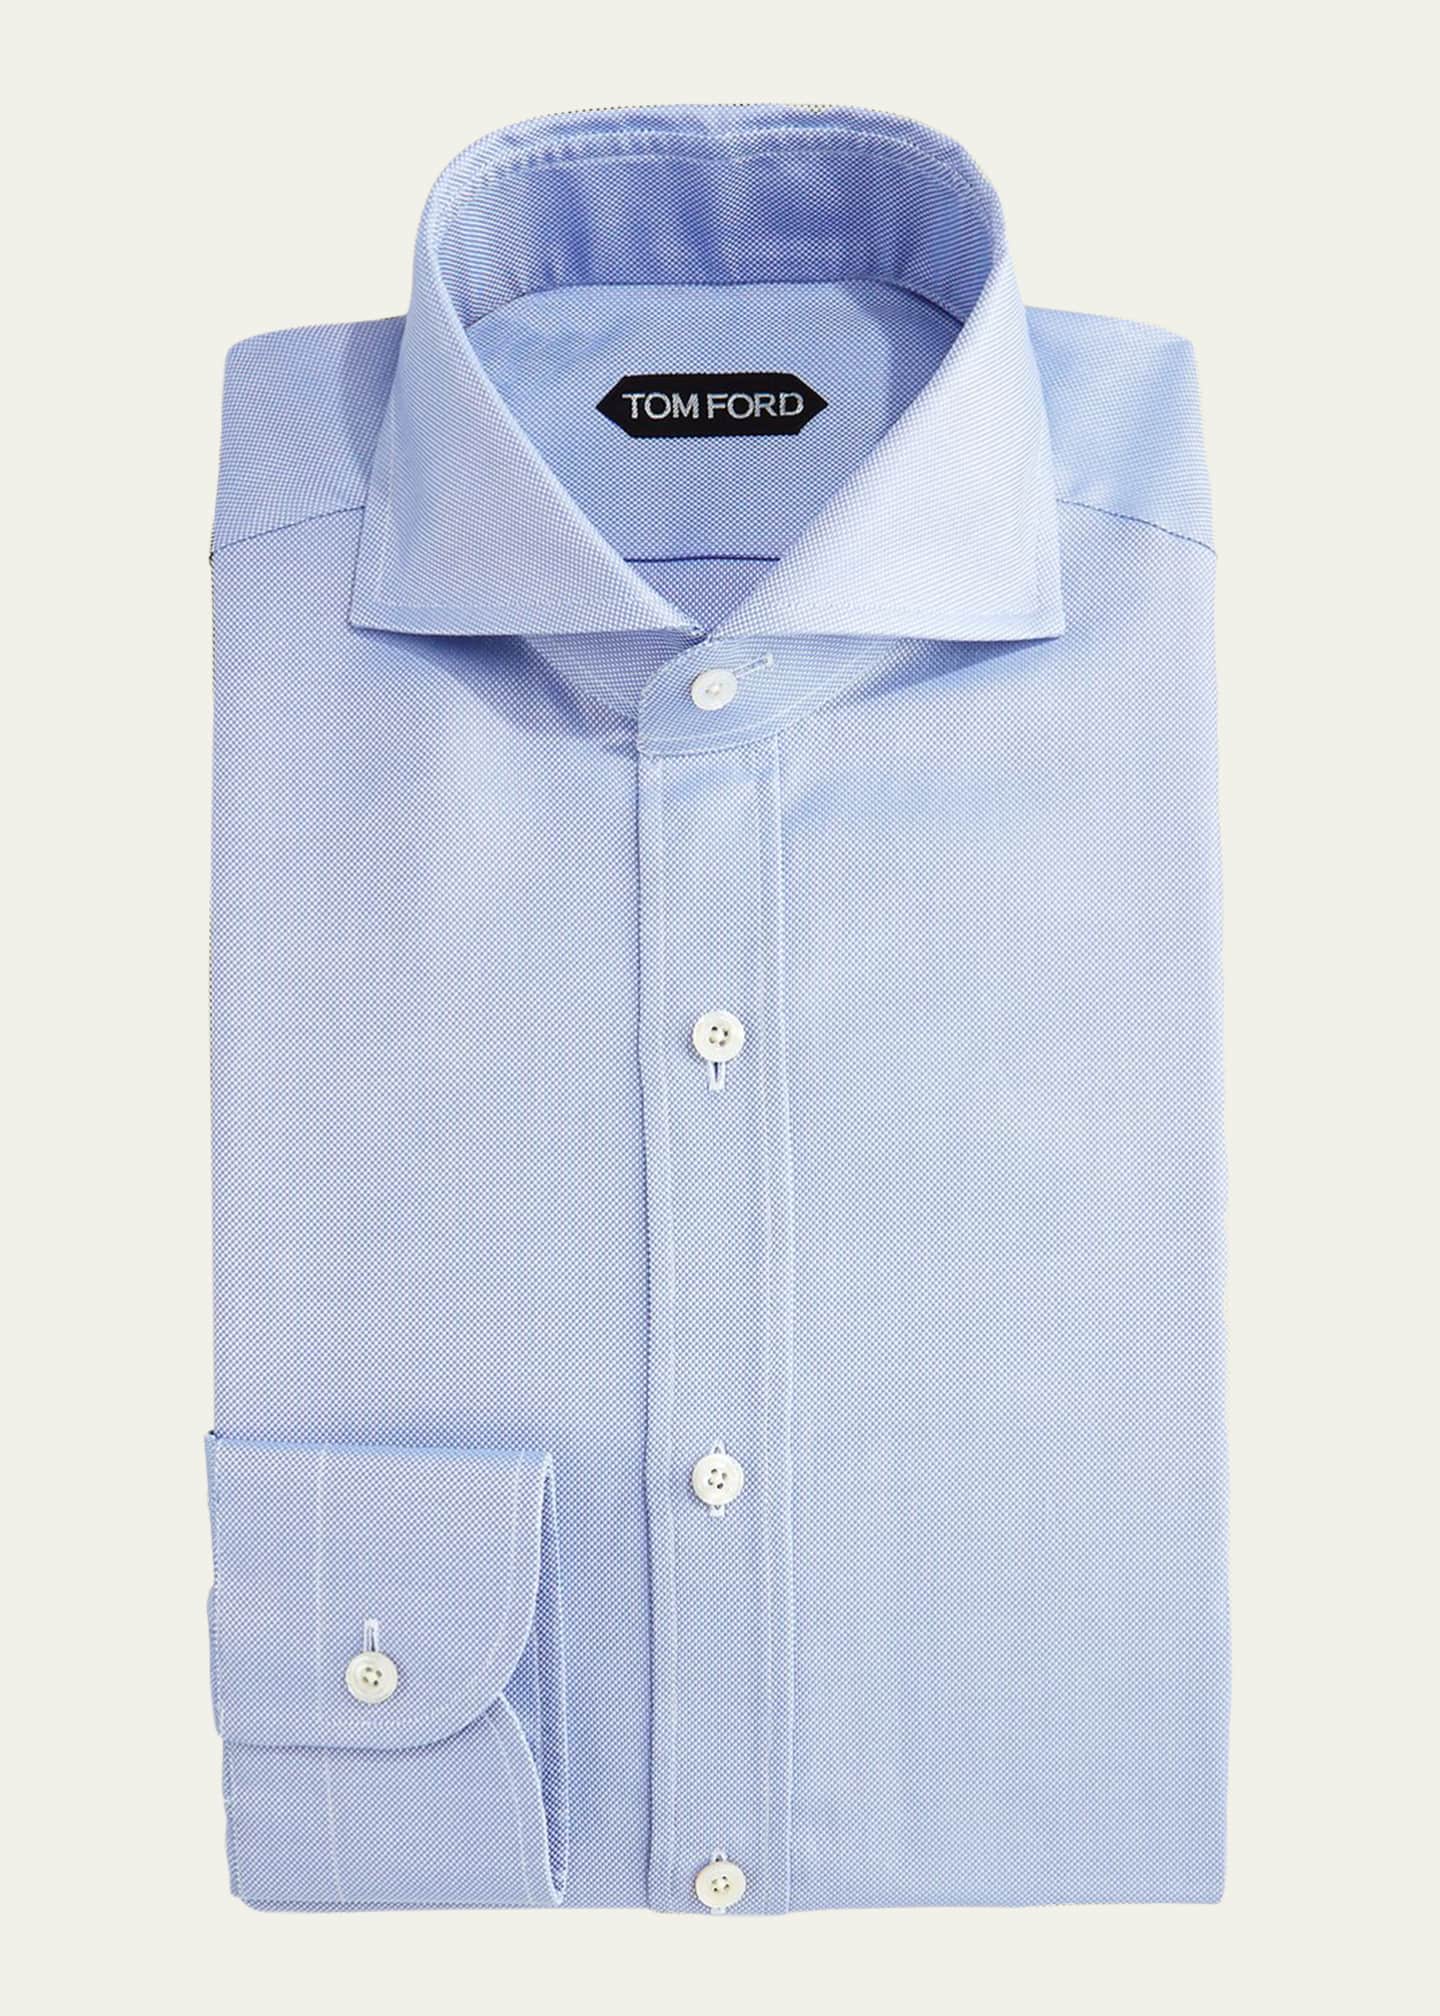 TOM FORD Tailored-Fit Textured Oxford Dress Shirt, Blue - Bergdorf Goodman